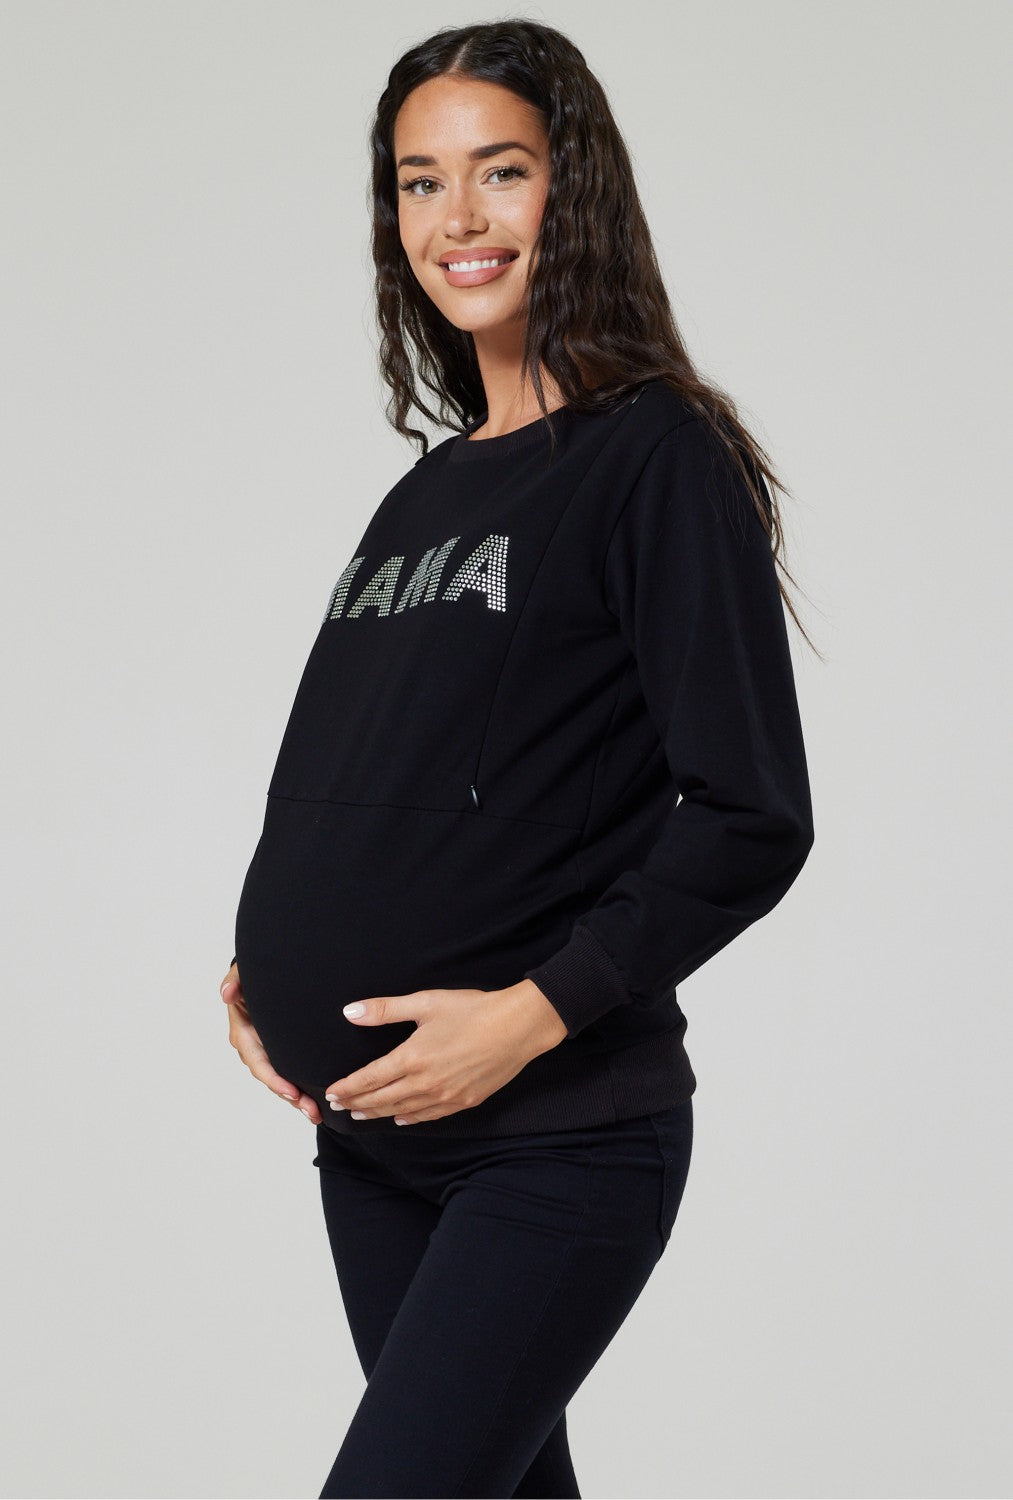 Women's Maternity Bling Sweatshirt